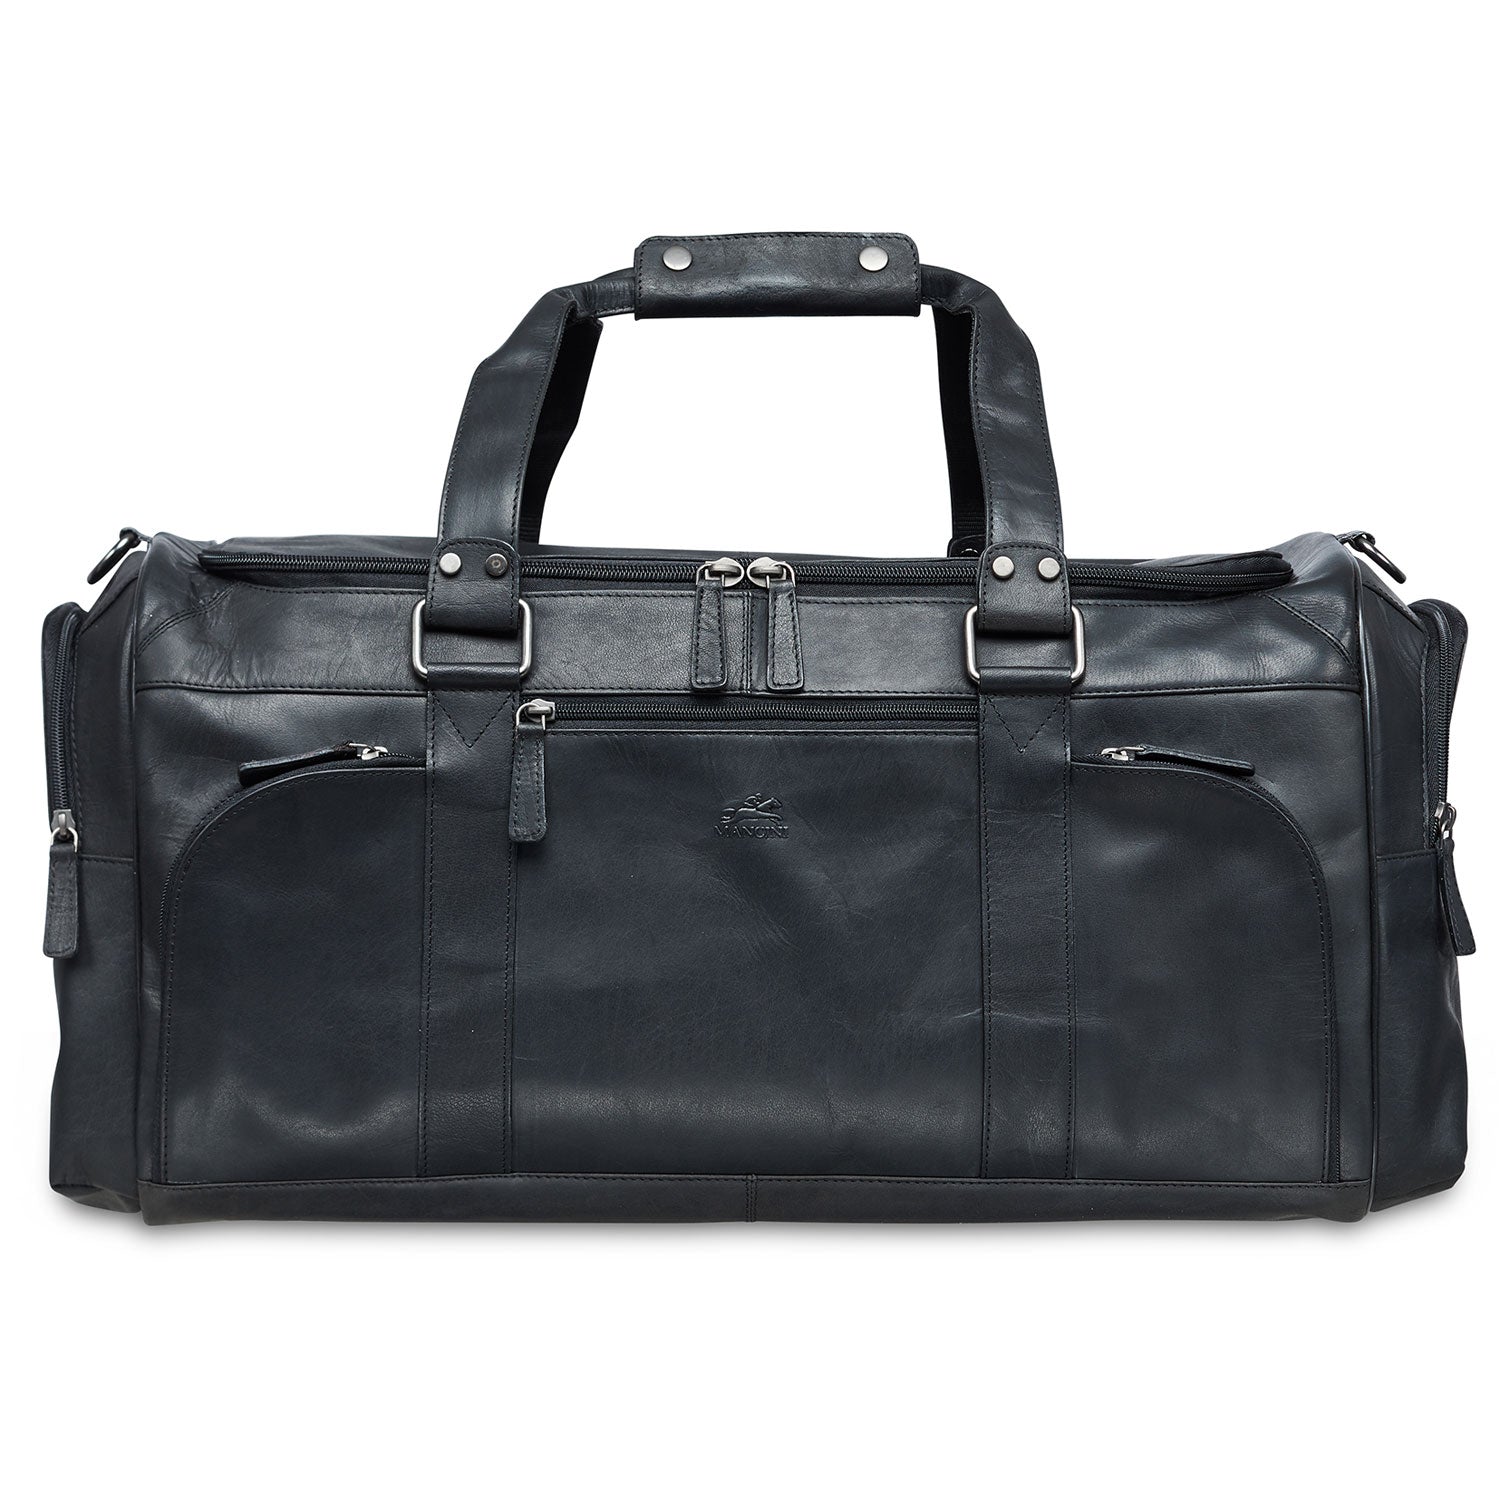 Mancini Leather Duffle Bag, 23" x 10" x 10.25", Black